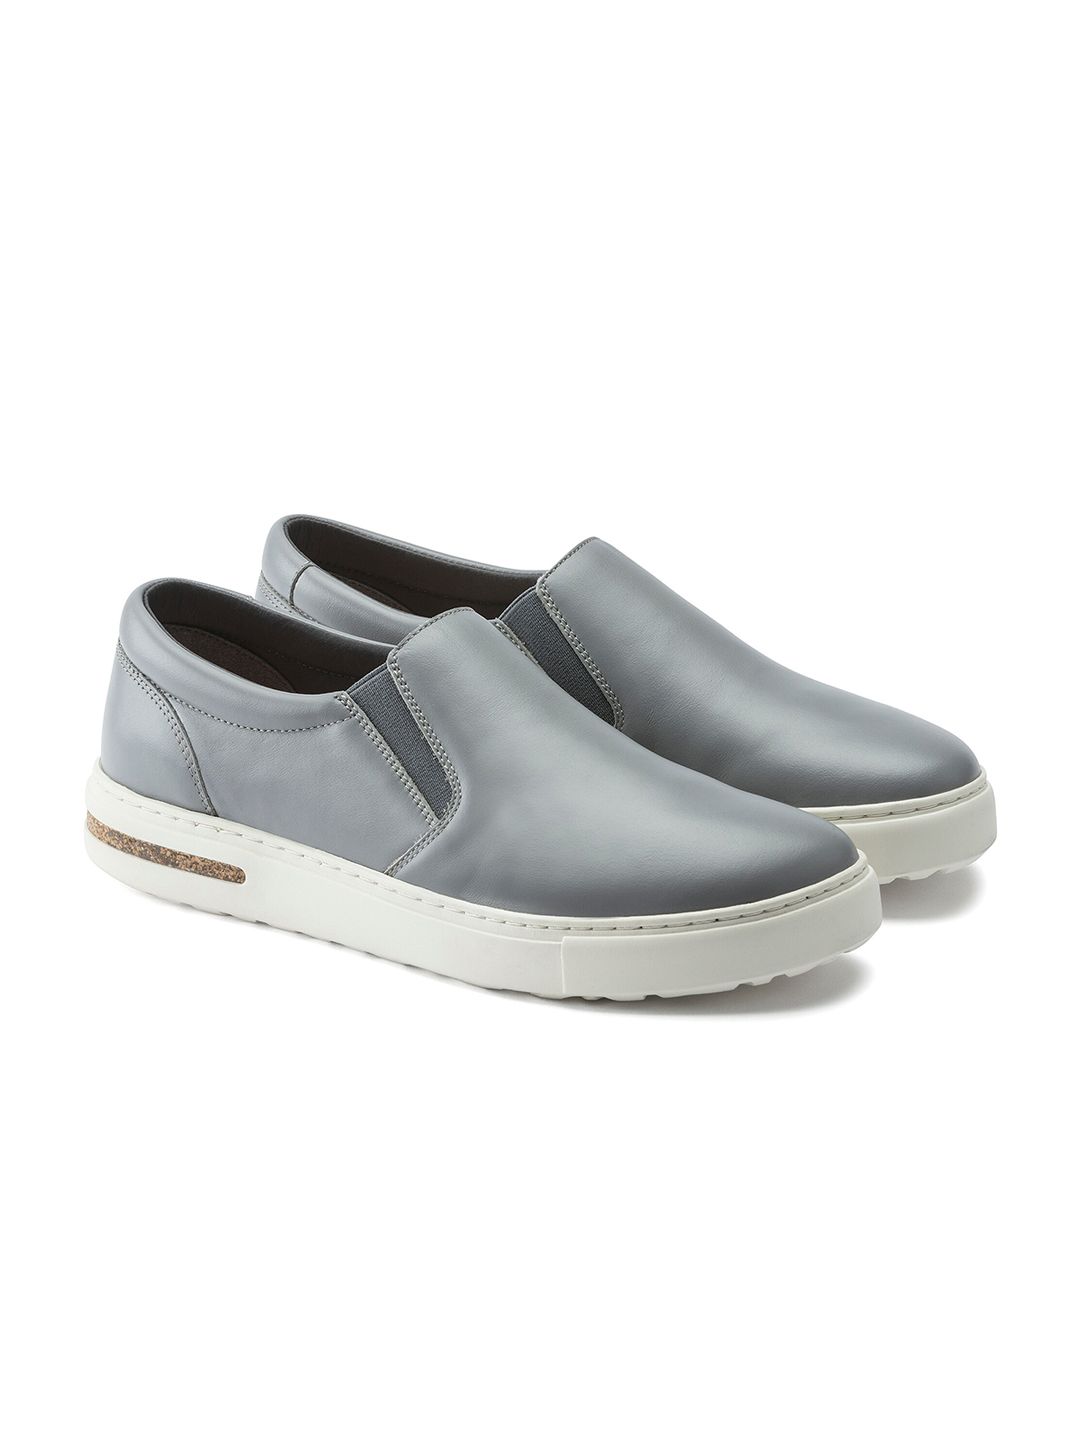 Birkenstock Unisex Grey Oswego Leather Slip-On Sneakers Price in India